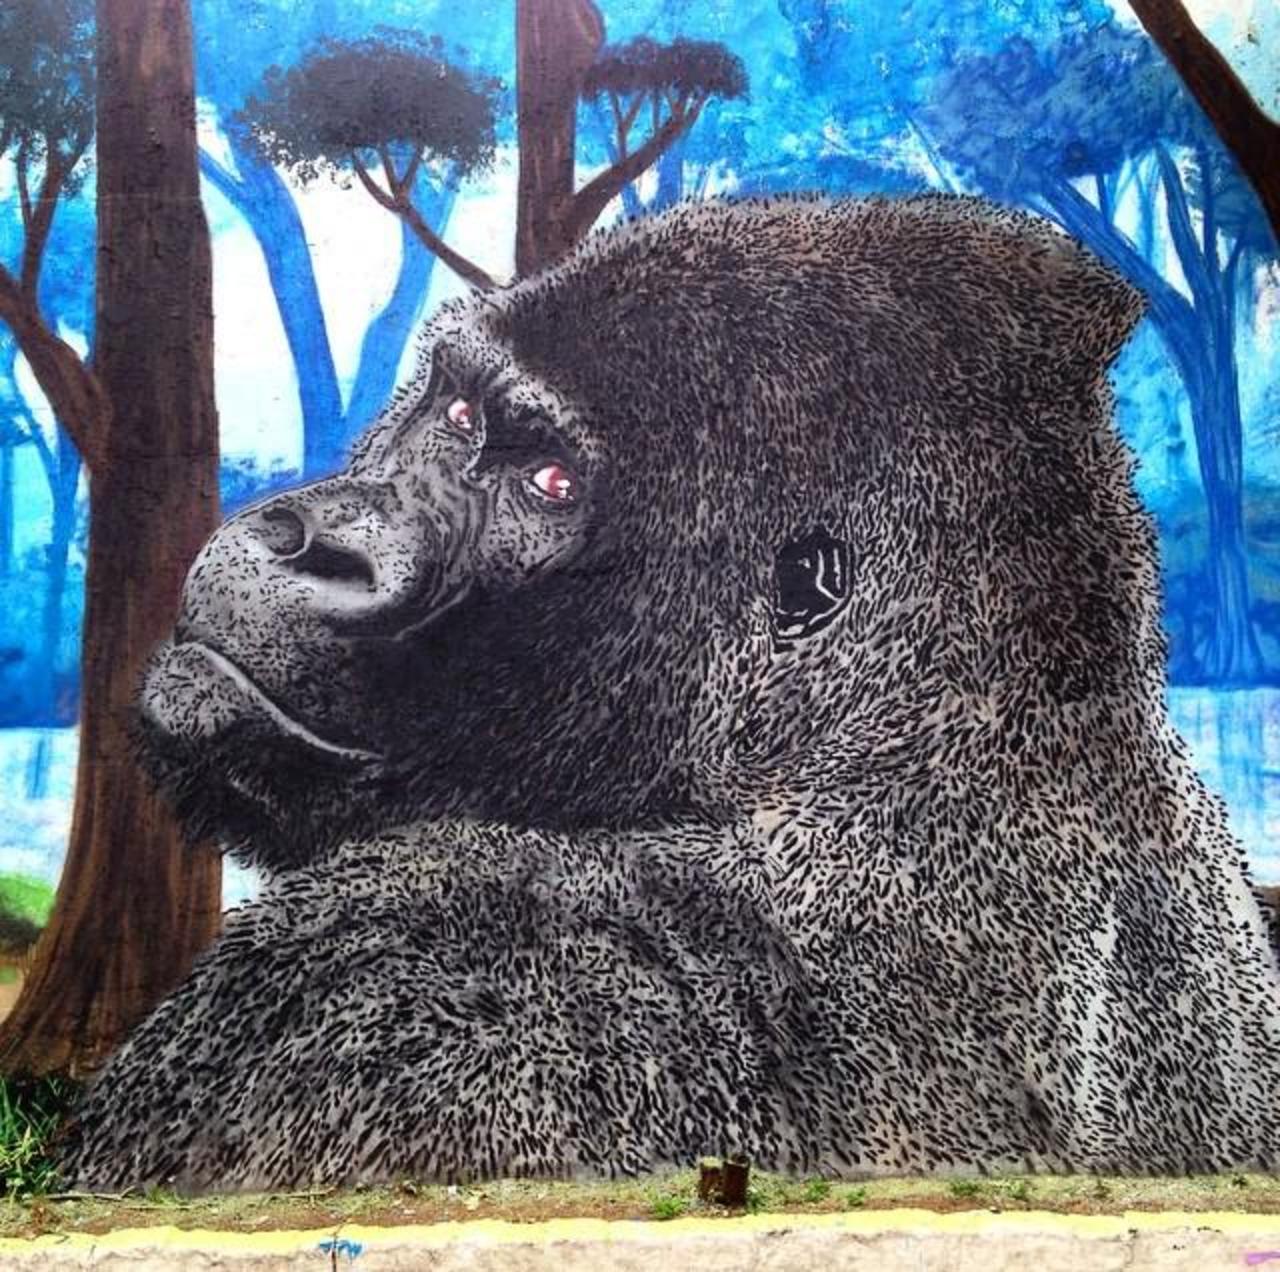 Superb Nature in Street Art piece by Thassio in São Paulo, Brazil  

#art #mural #graffiti #streetart http://t.co/5FjiT8qzav